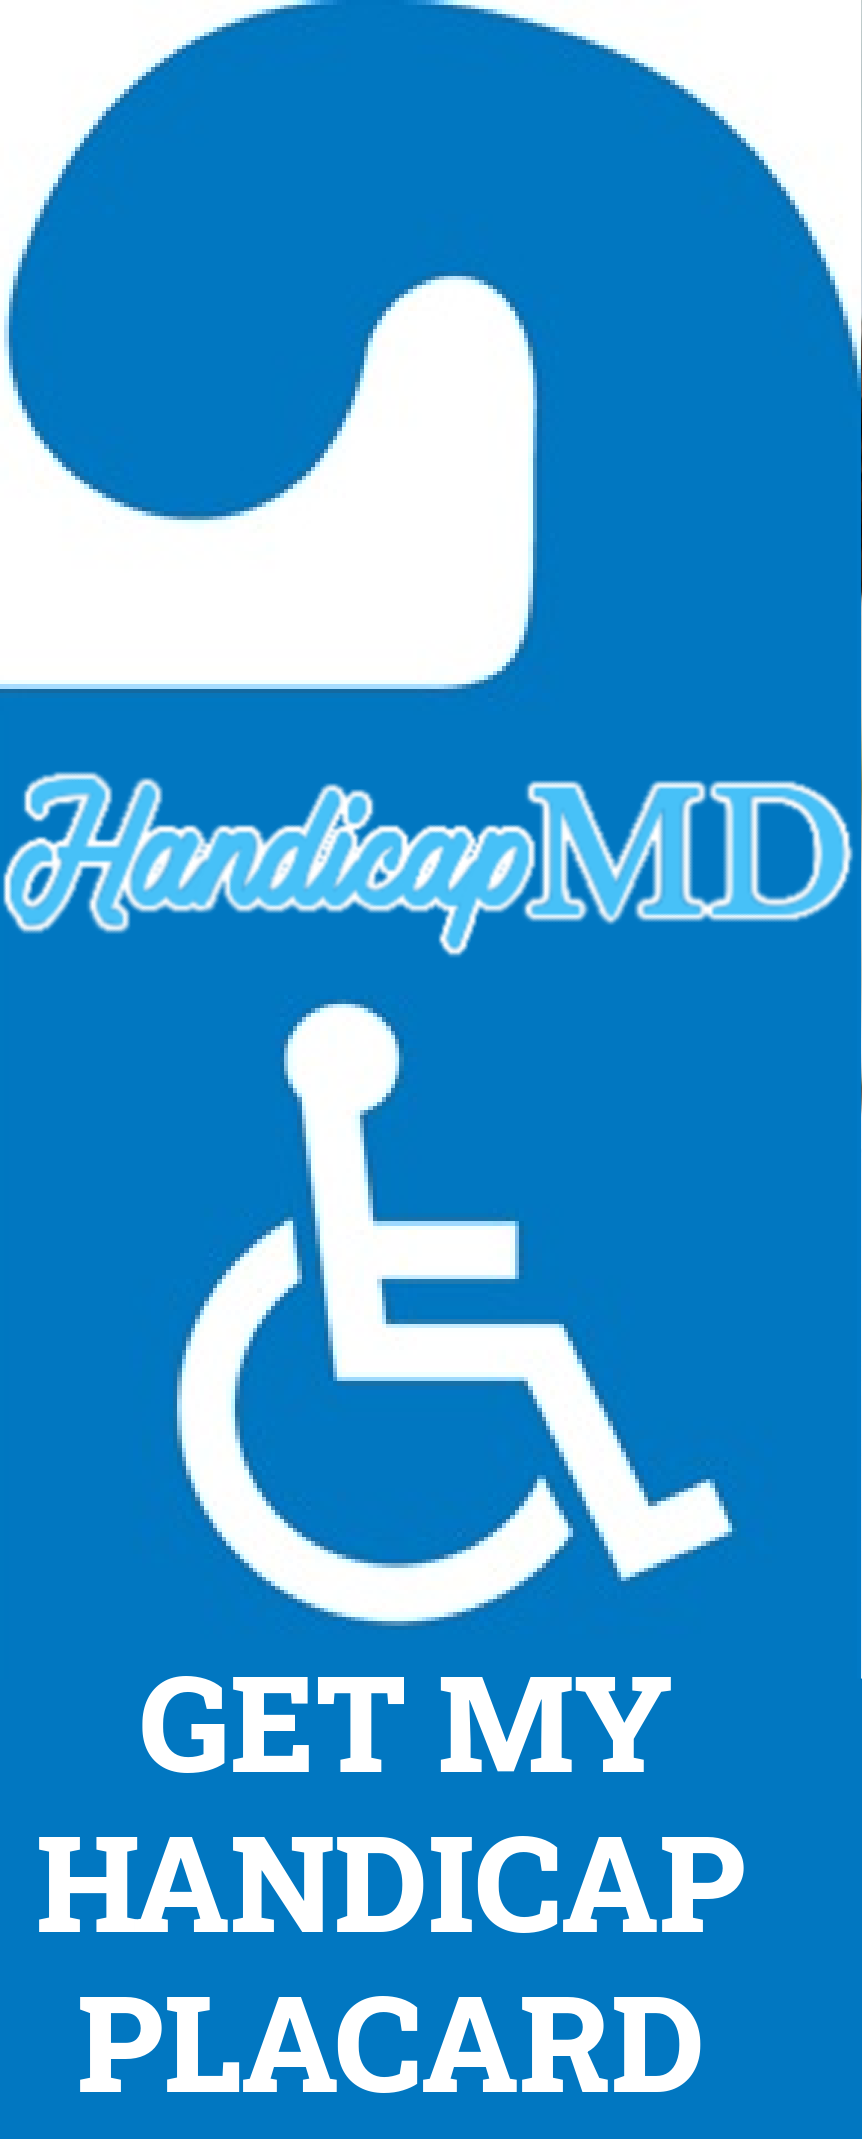 Maine Handicap Parking Placards